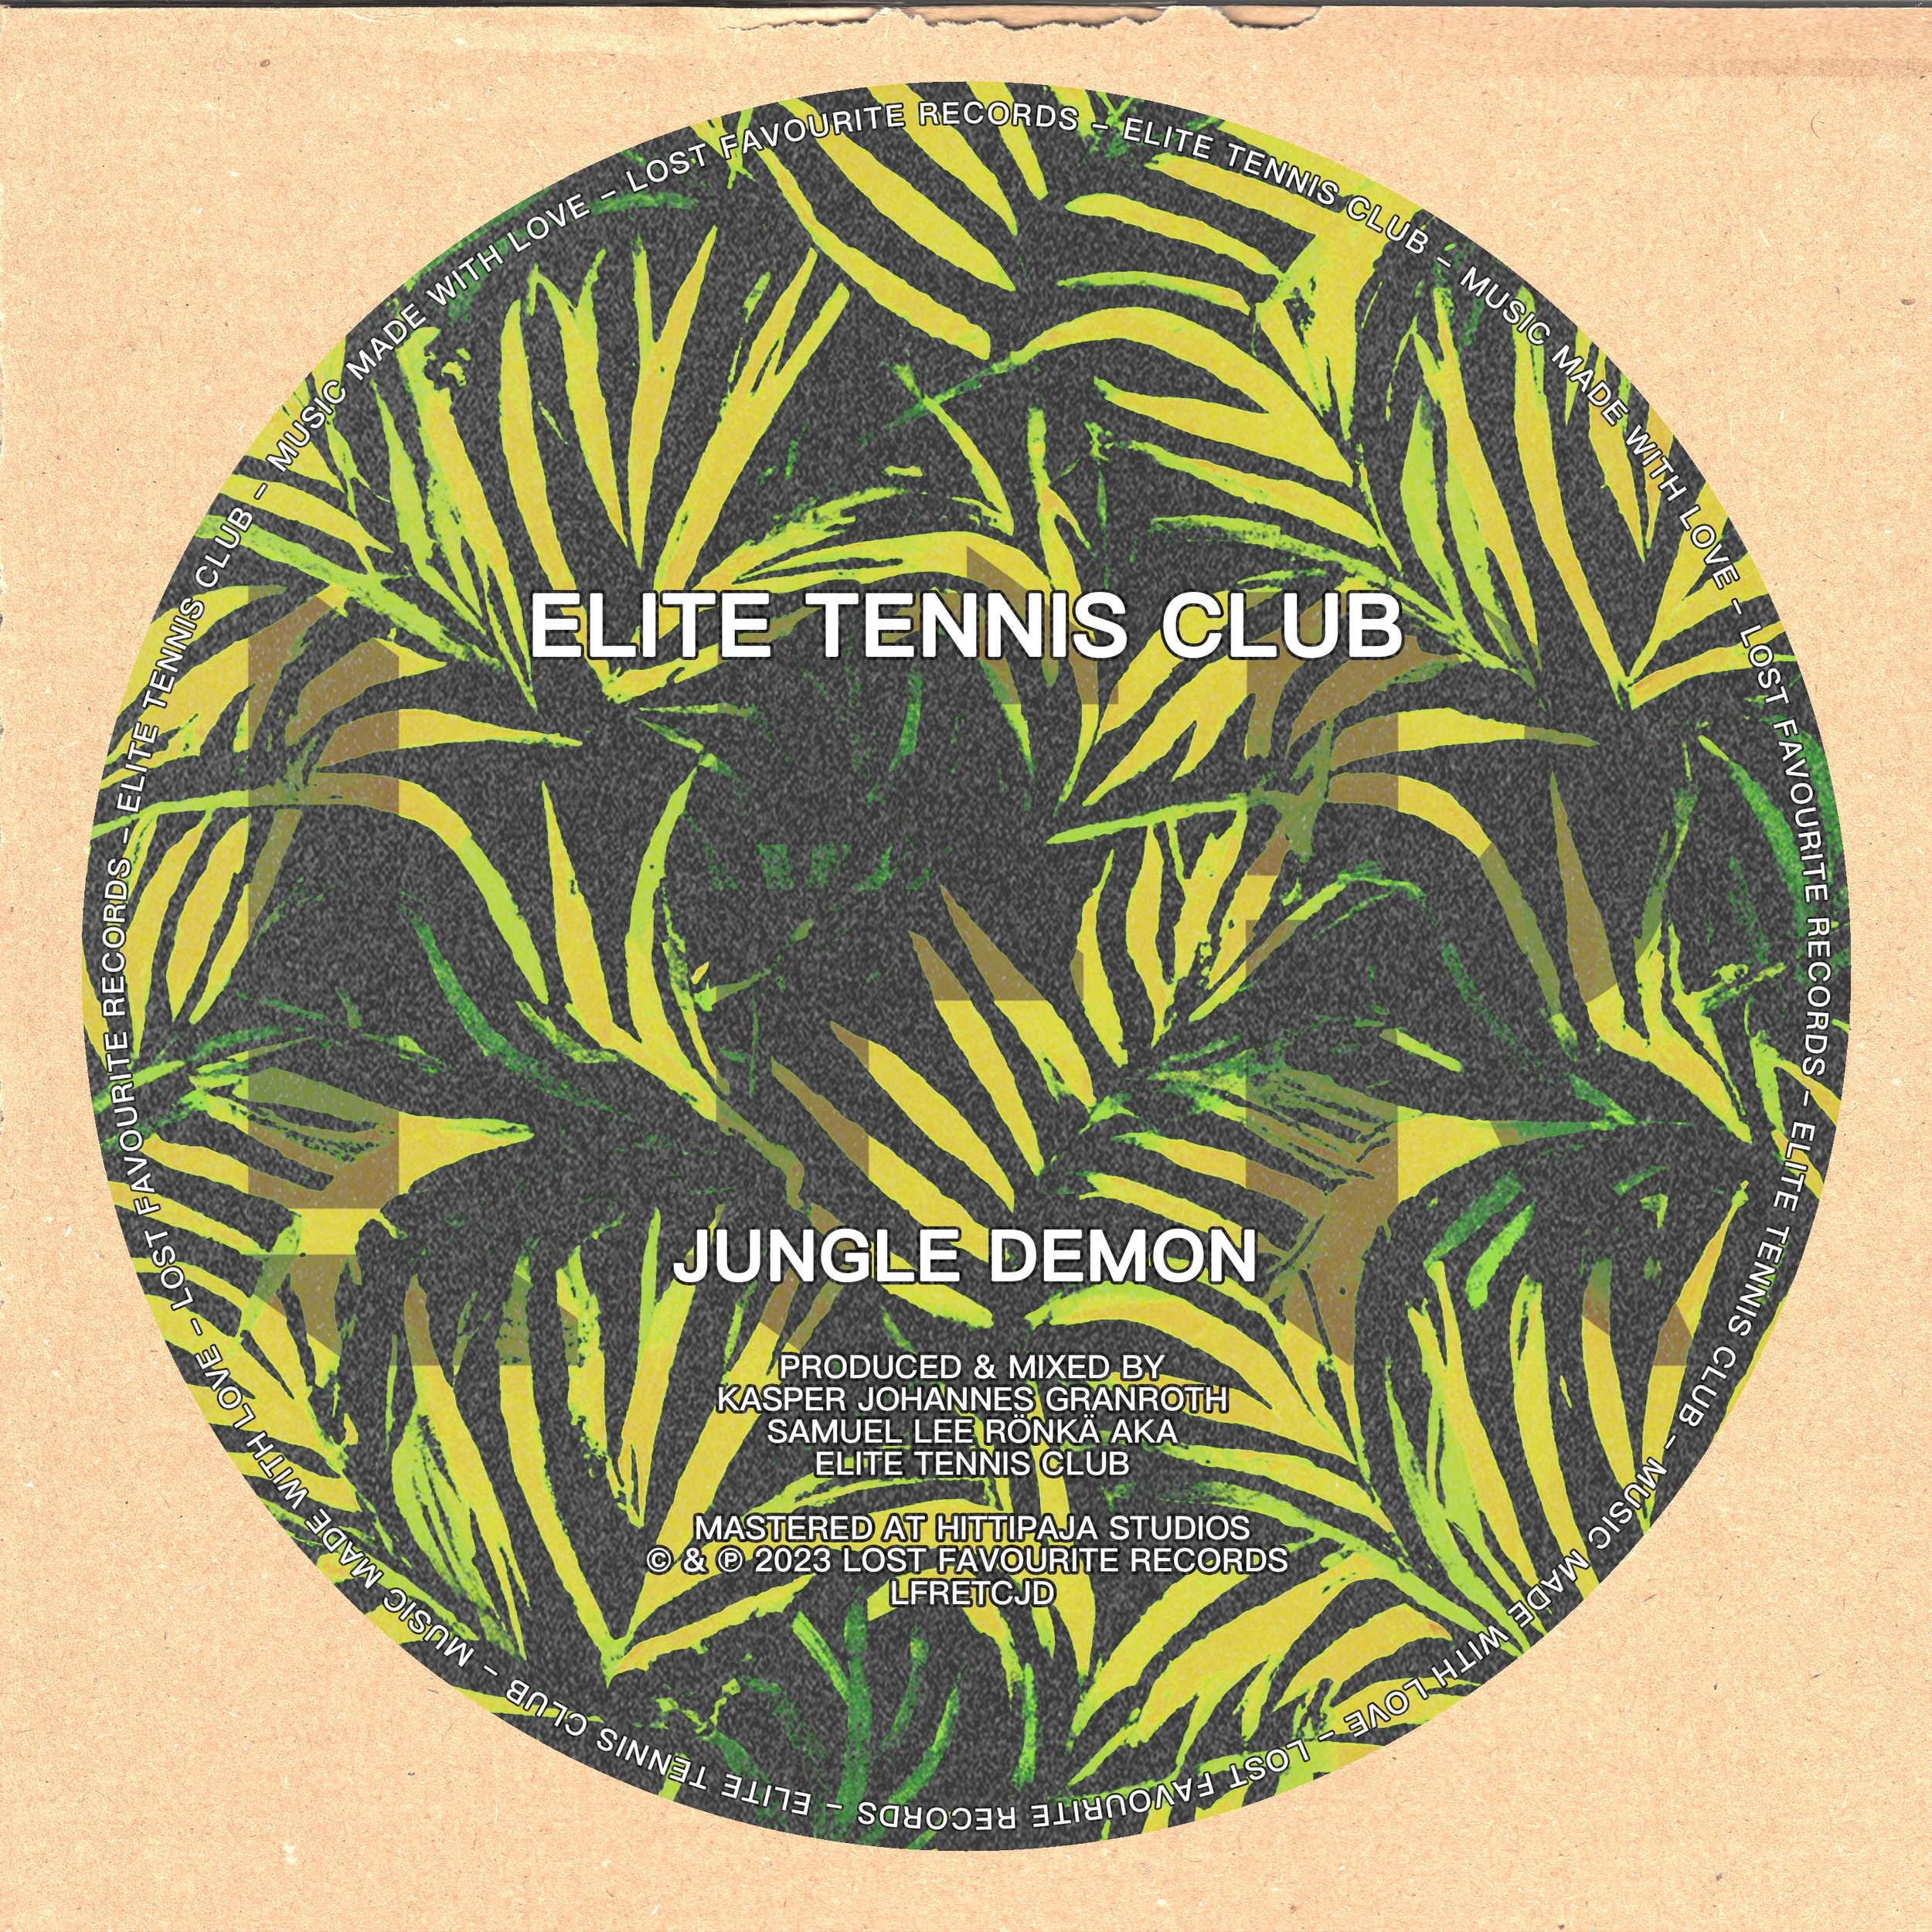  Elite Tennis Club - Jungle Demon 